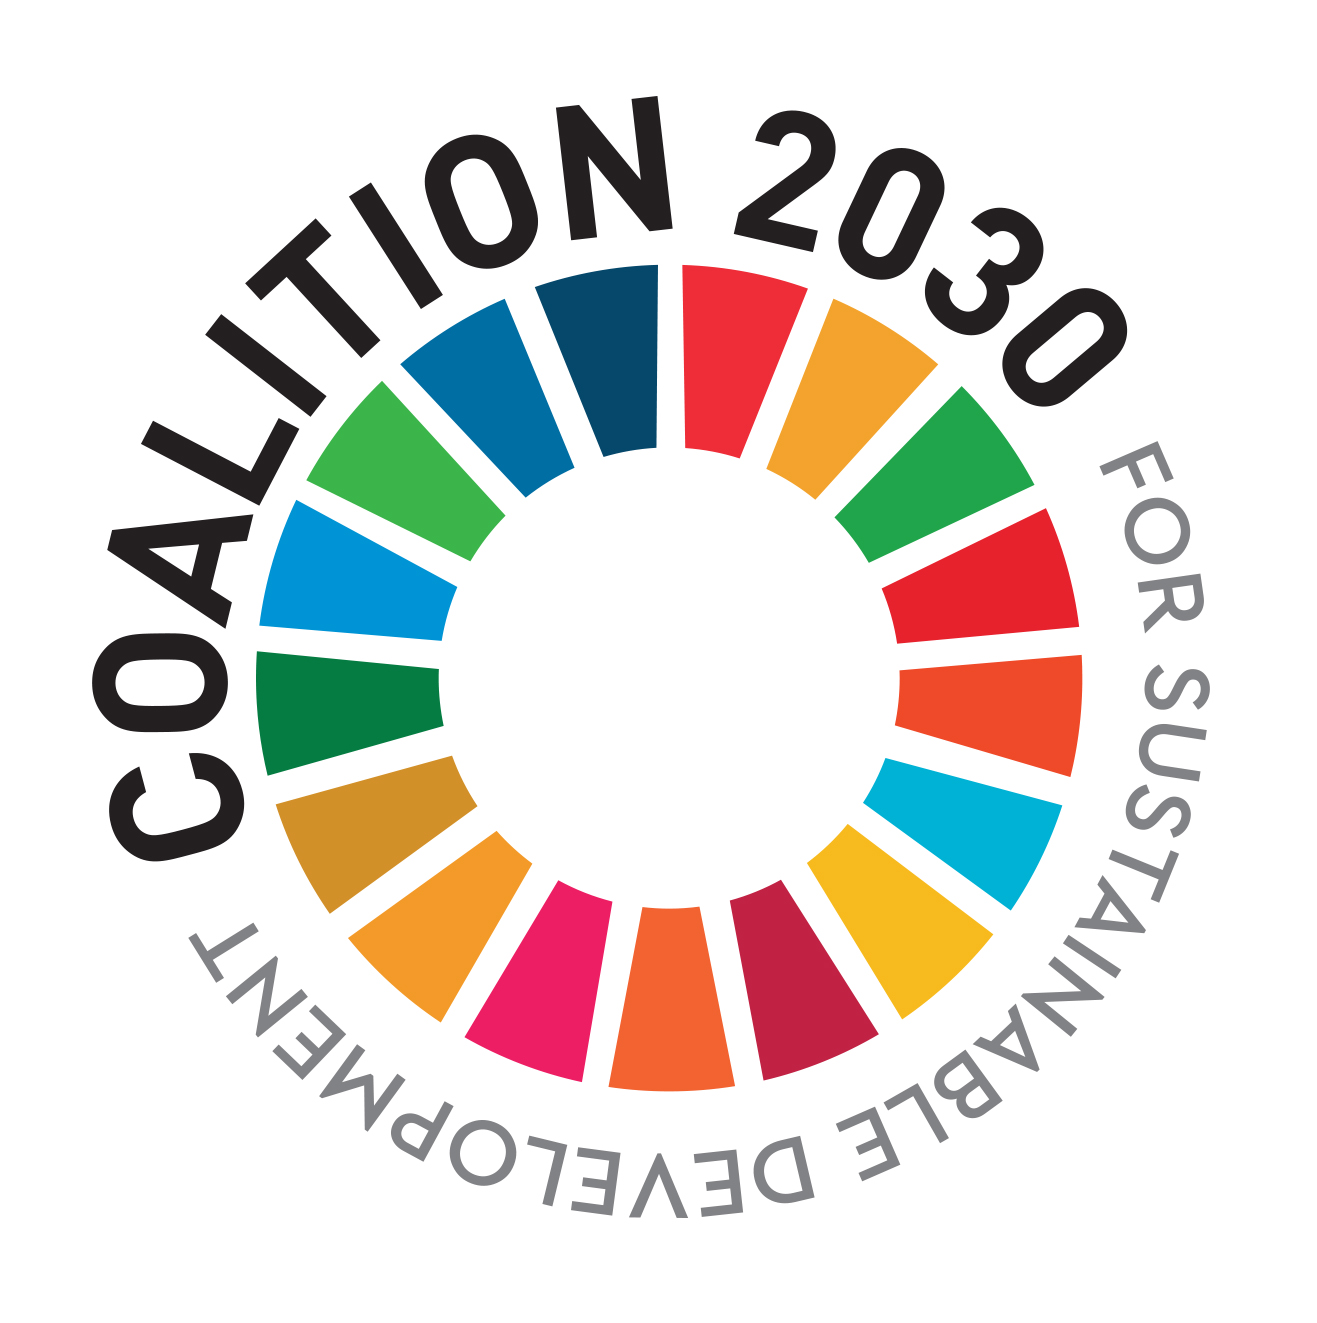 Coalition 2030